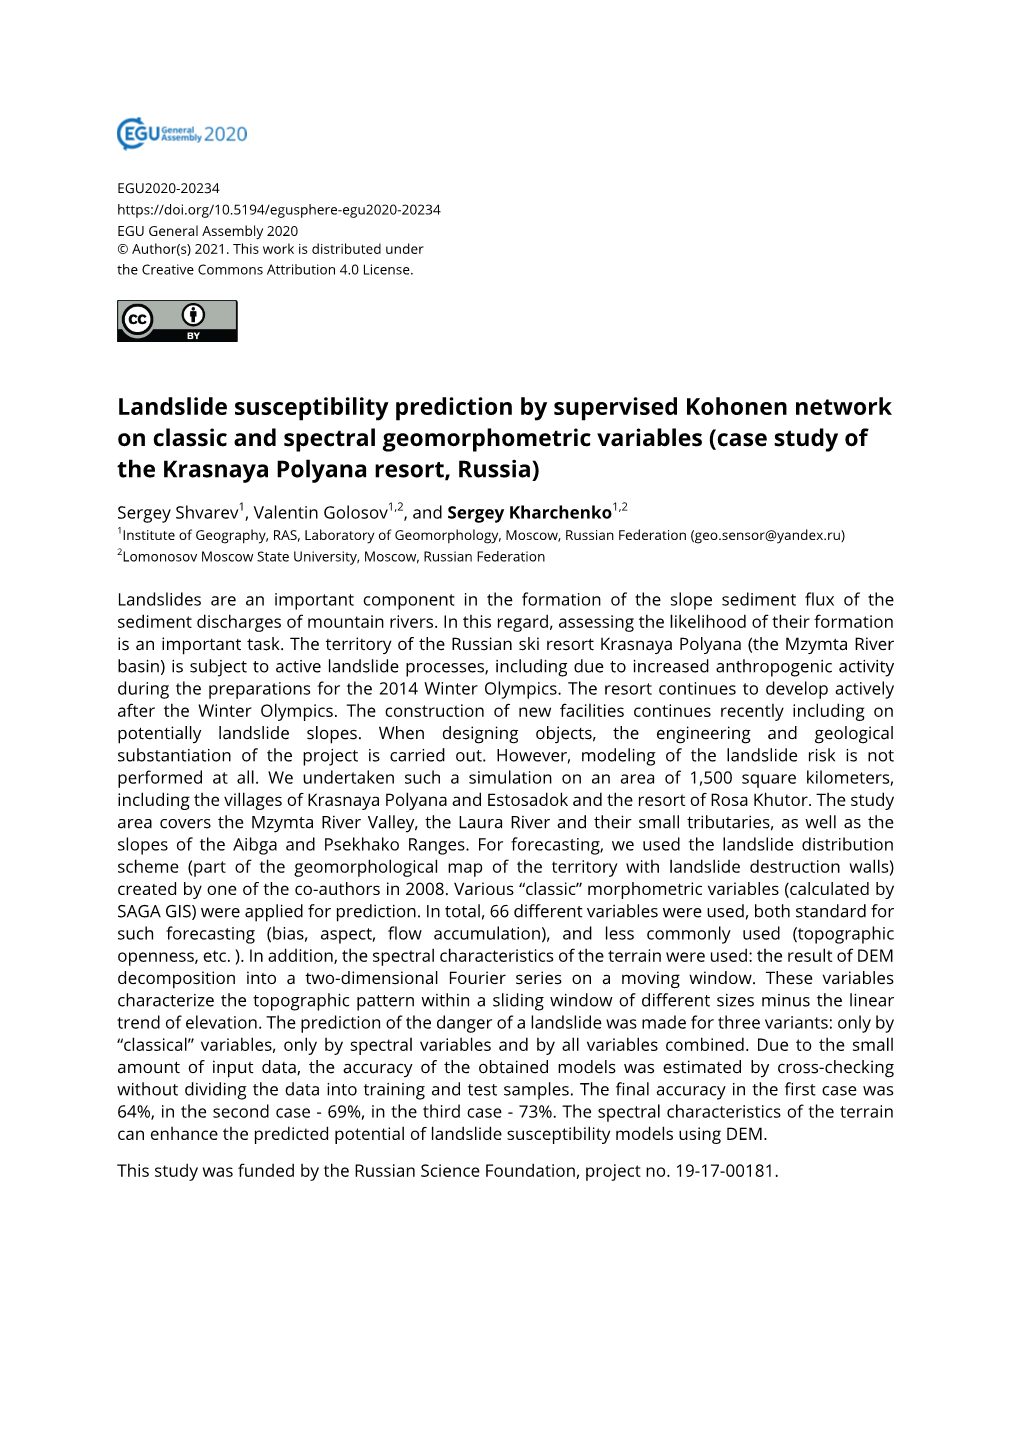 Landslide Susceptibility Prediction by Supervised